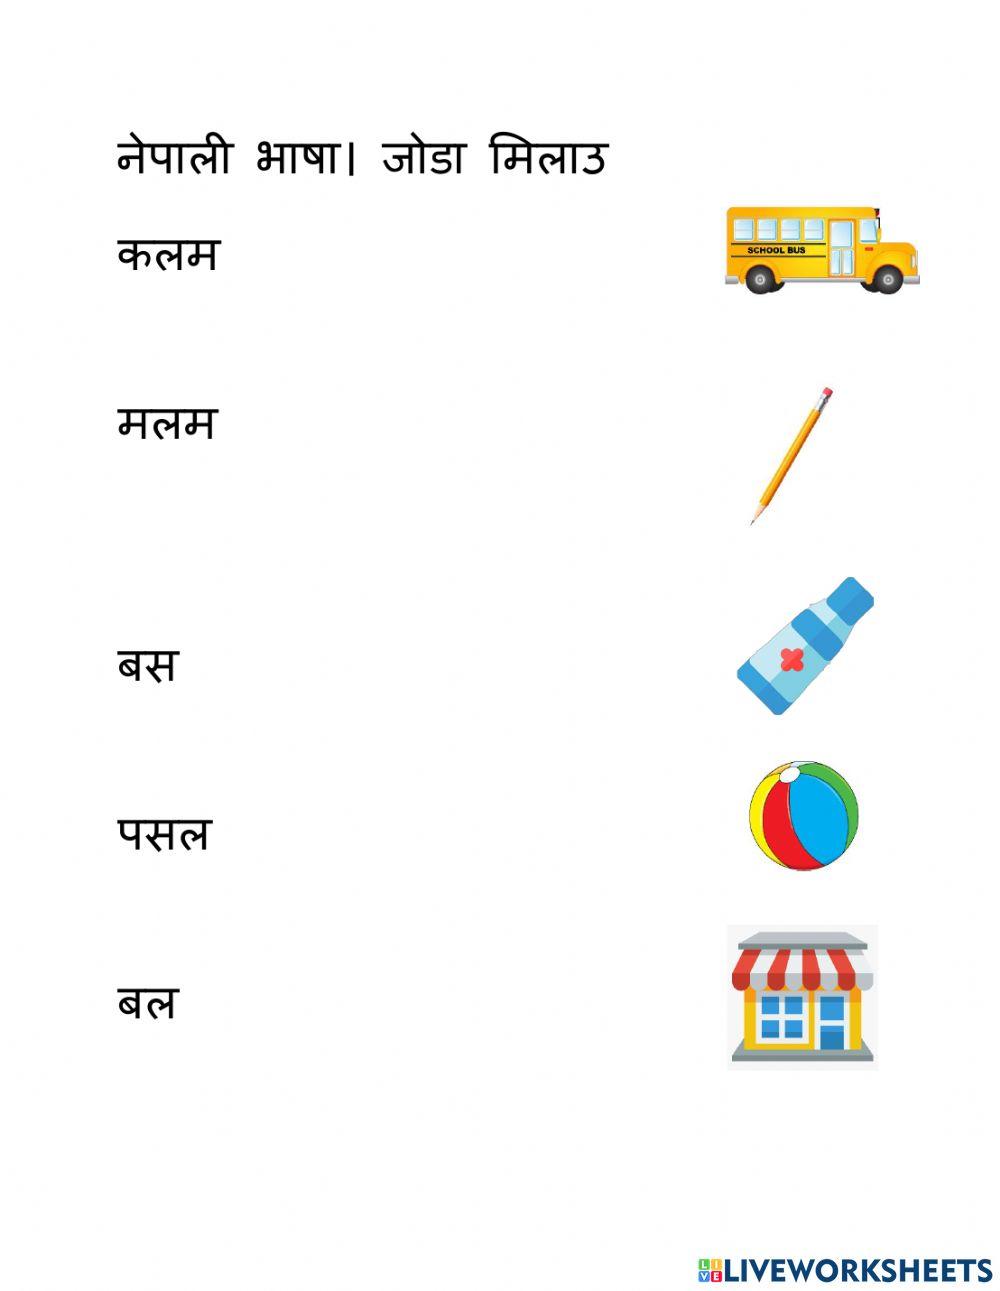 नेपाली भाषा। जोडा मिलाउ